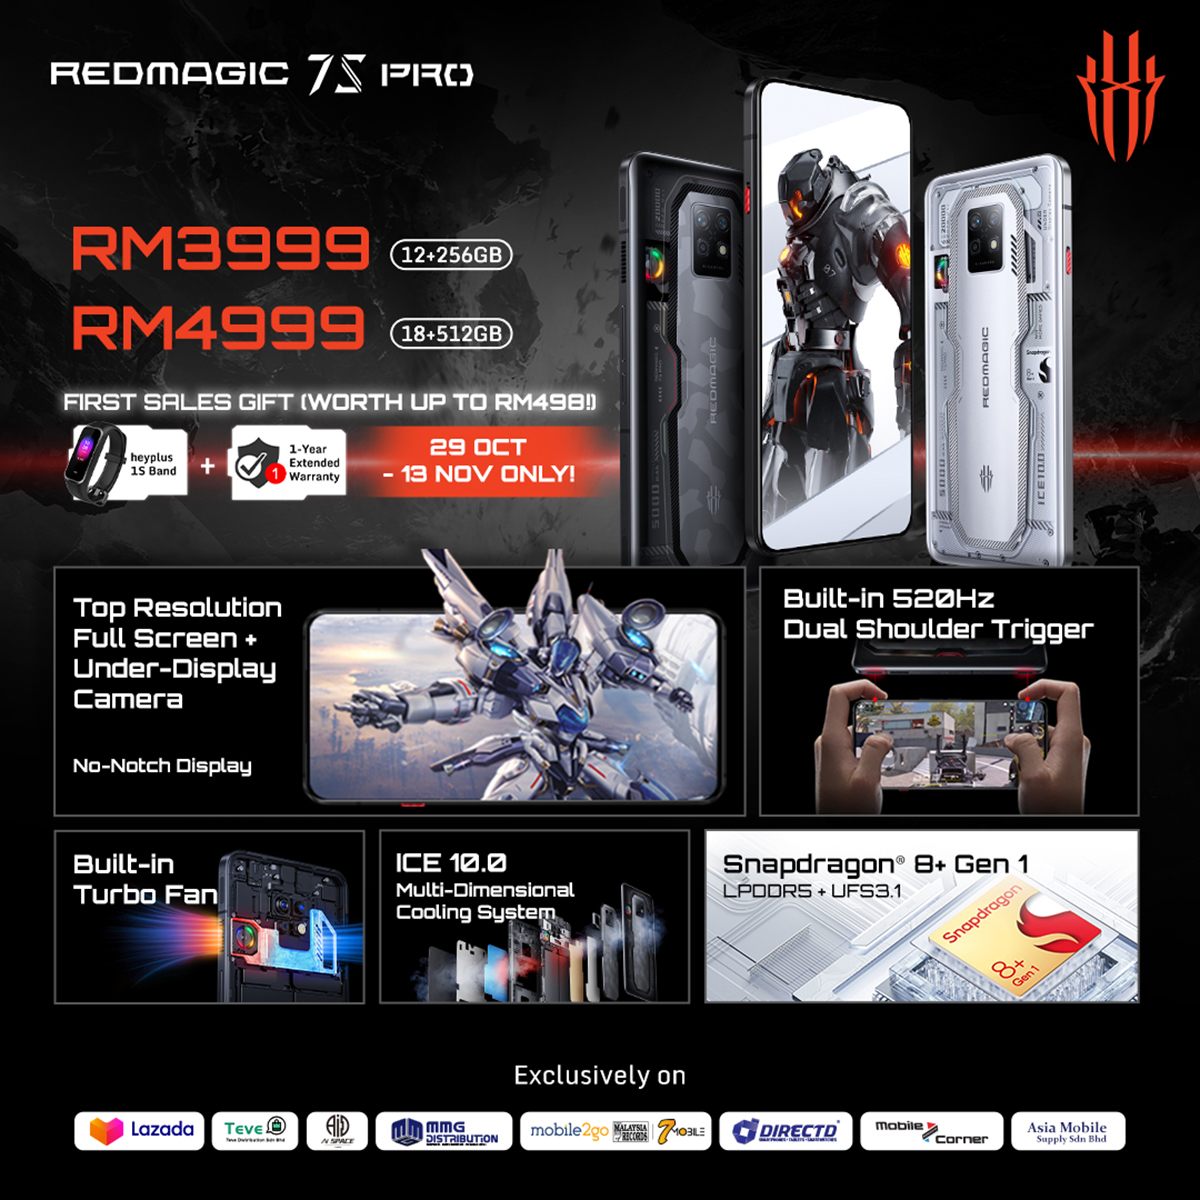 Redmagic 7S Pro launch Malaysia price